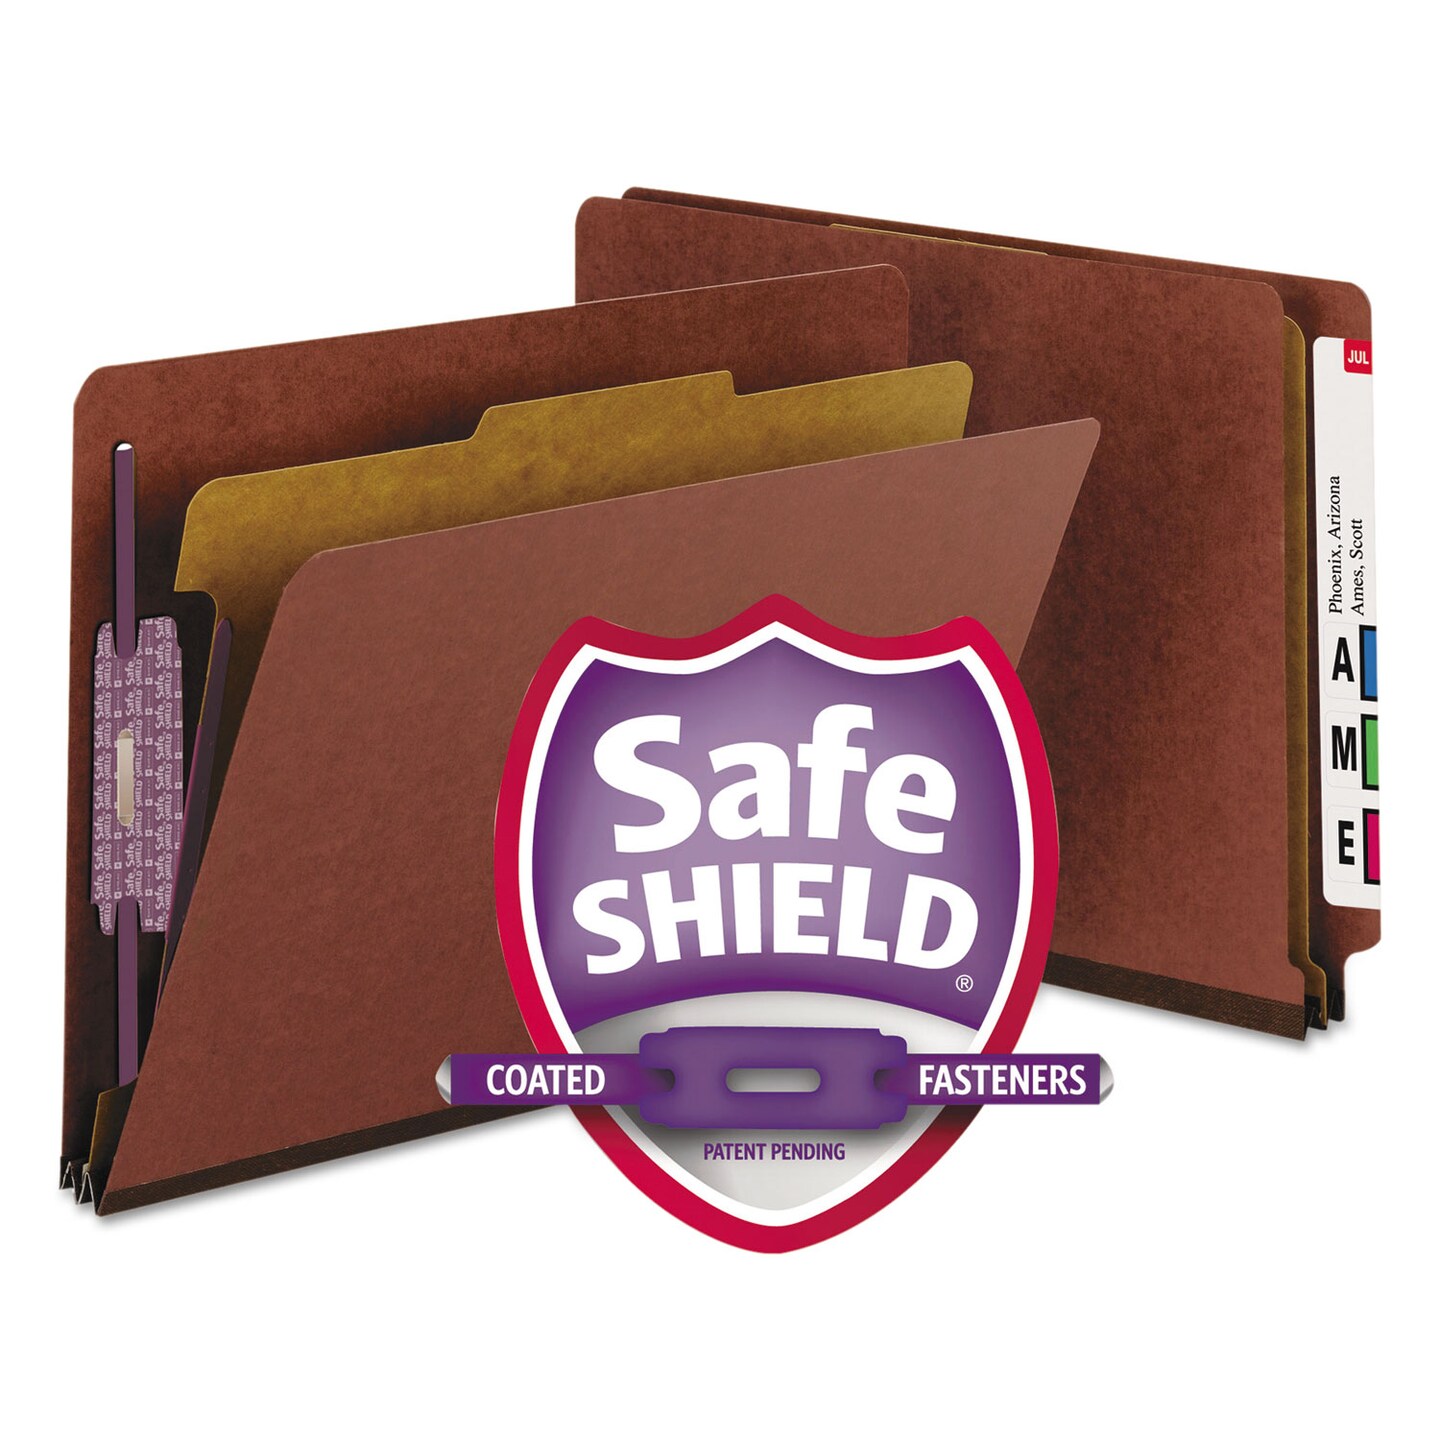 Smead End Tab Pressboard Classification Folders With Safeshield Coated